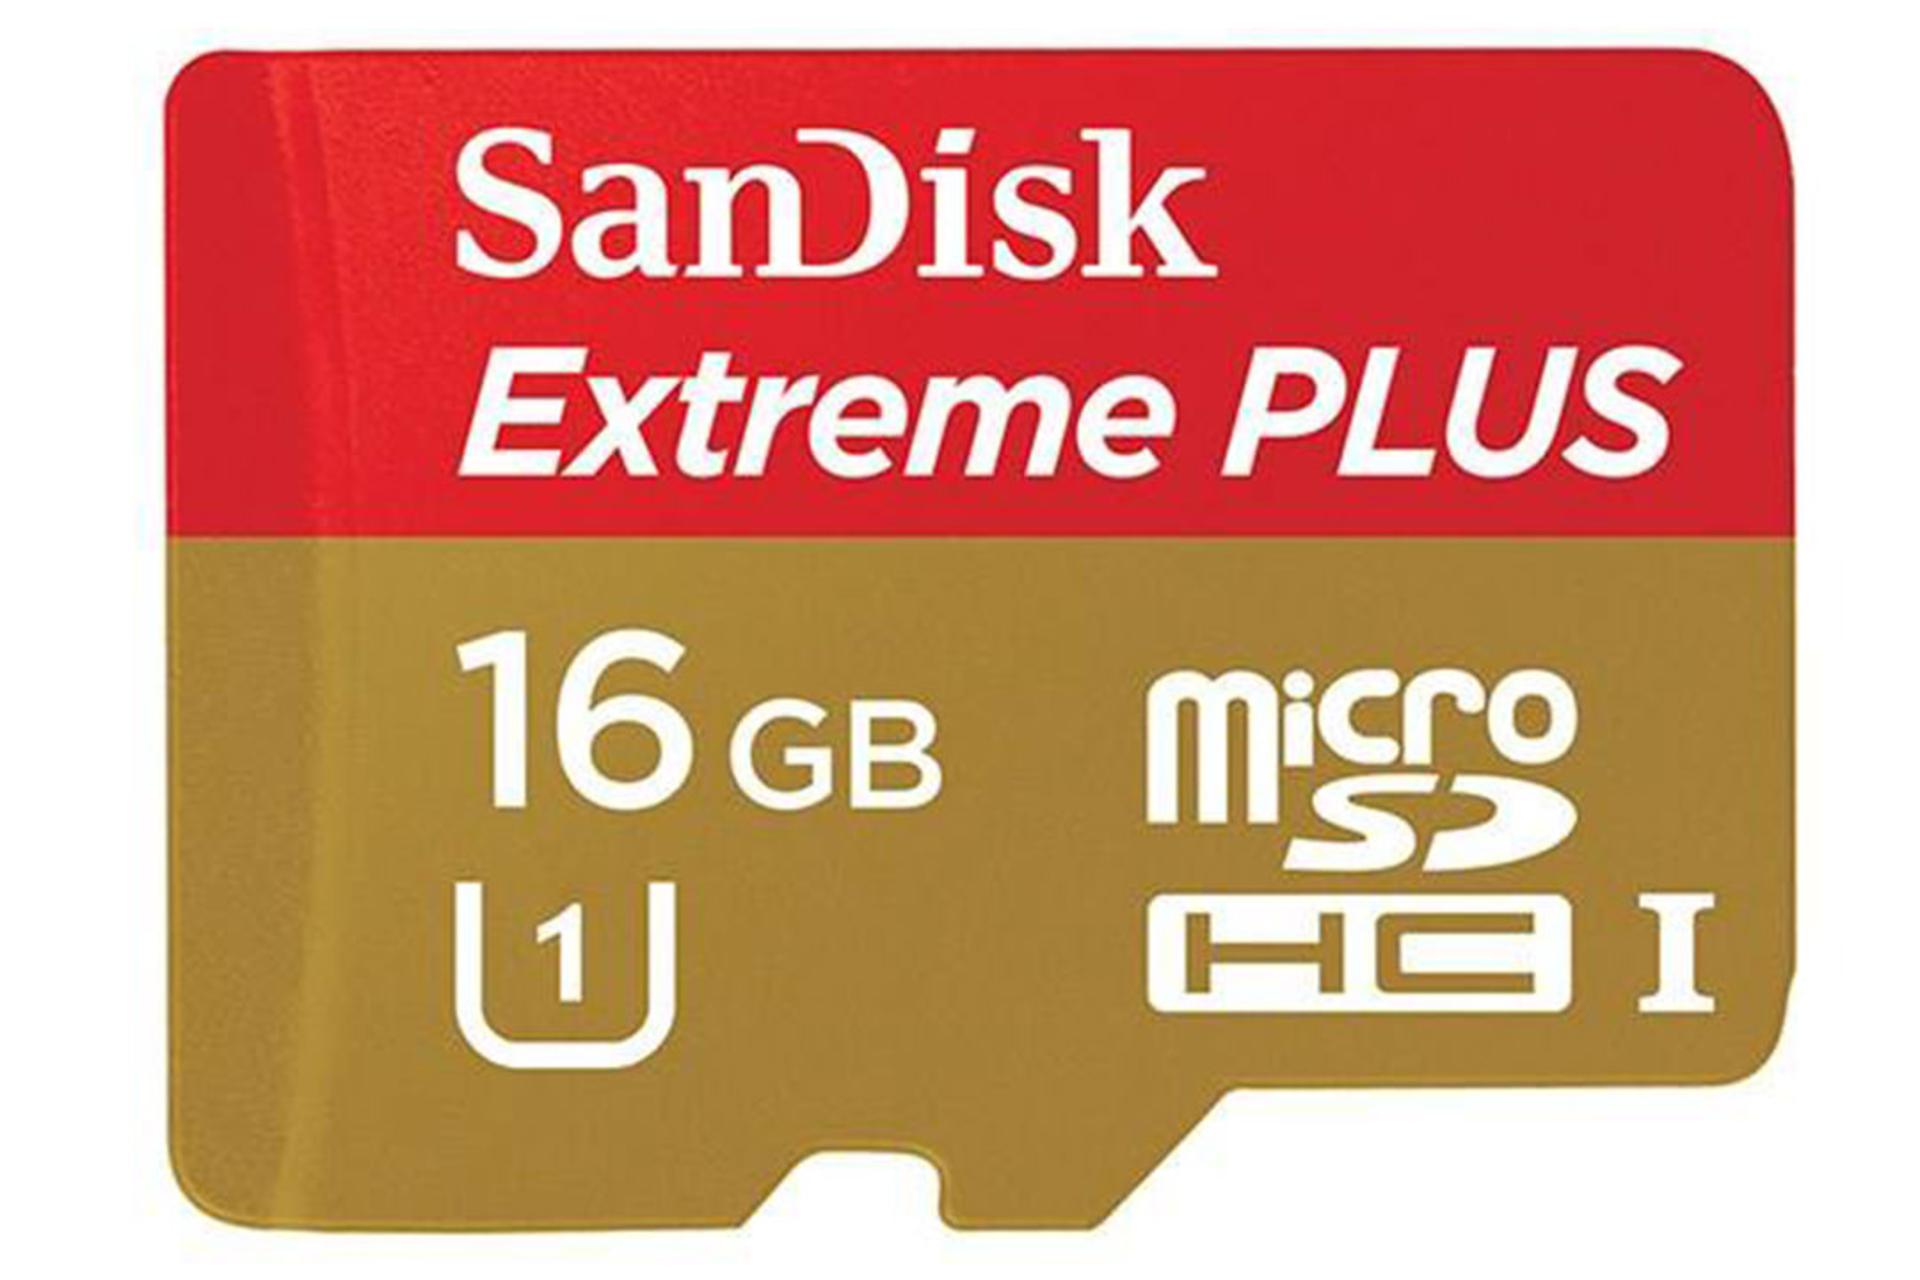 SanDisk Extreme Plus microSDHC Class 10 UHS-I U1 16GB